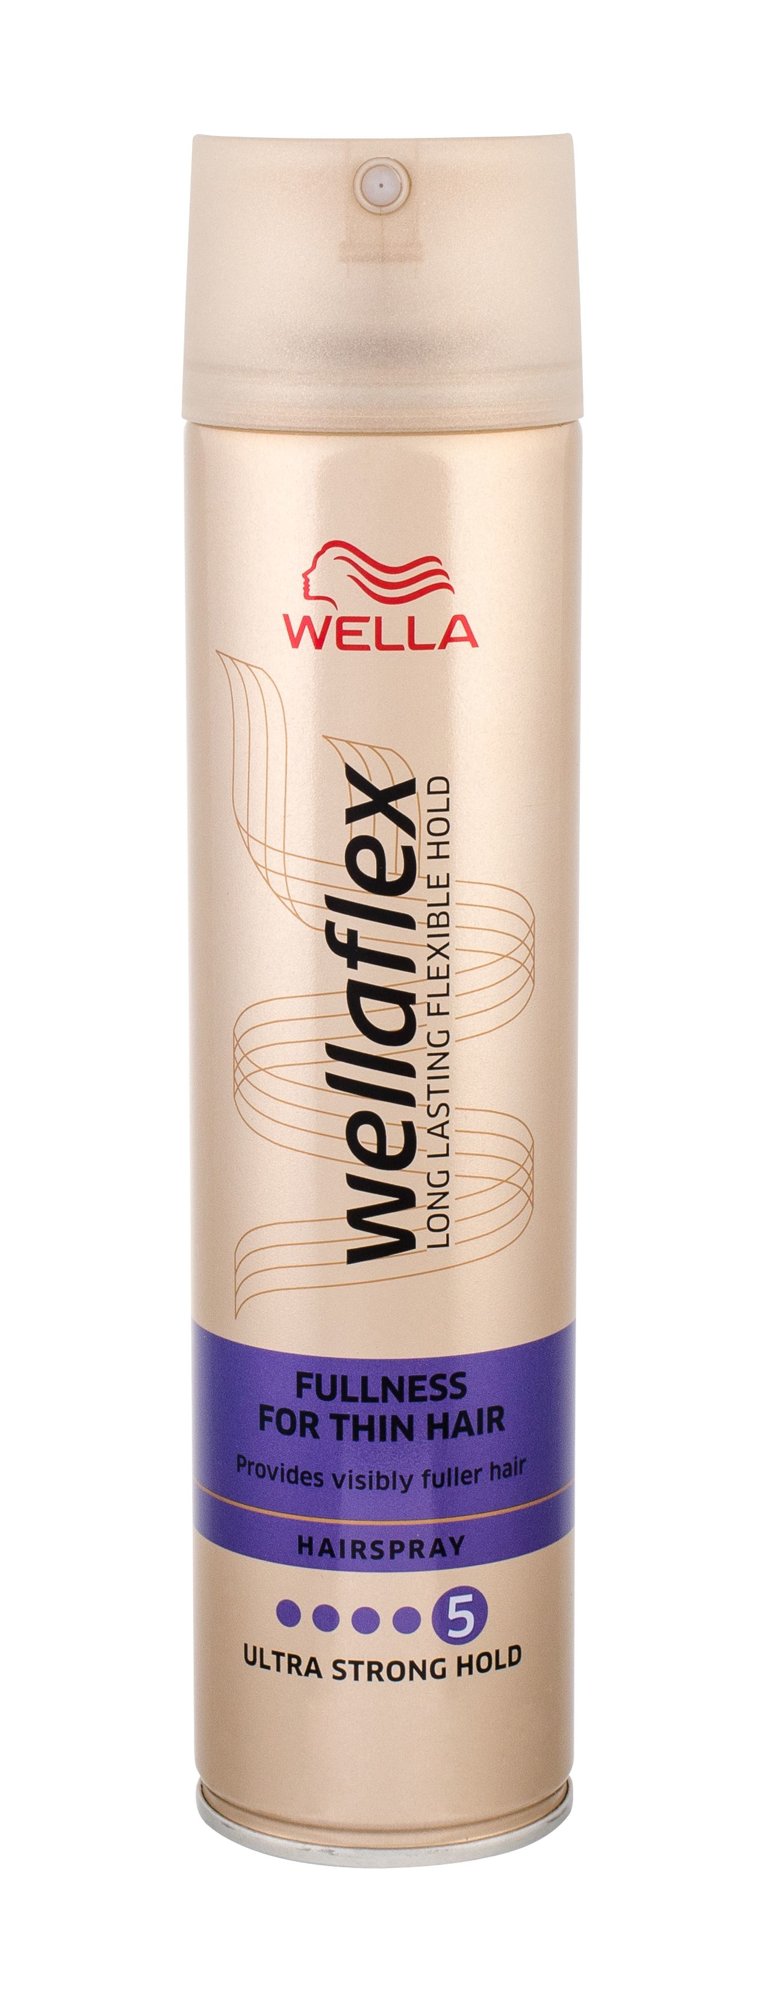 Wella Wellaflex Fullness For Thin Hair